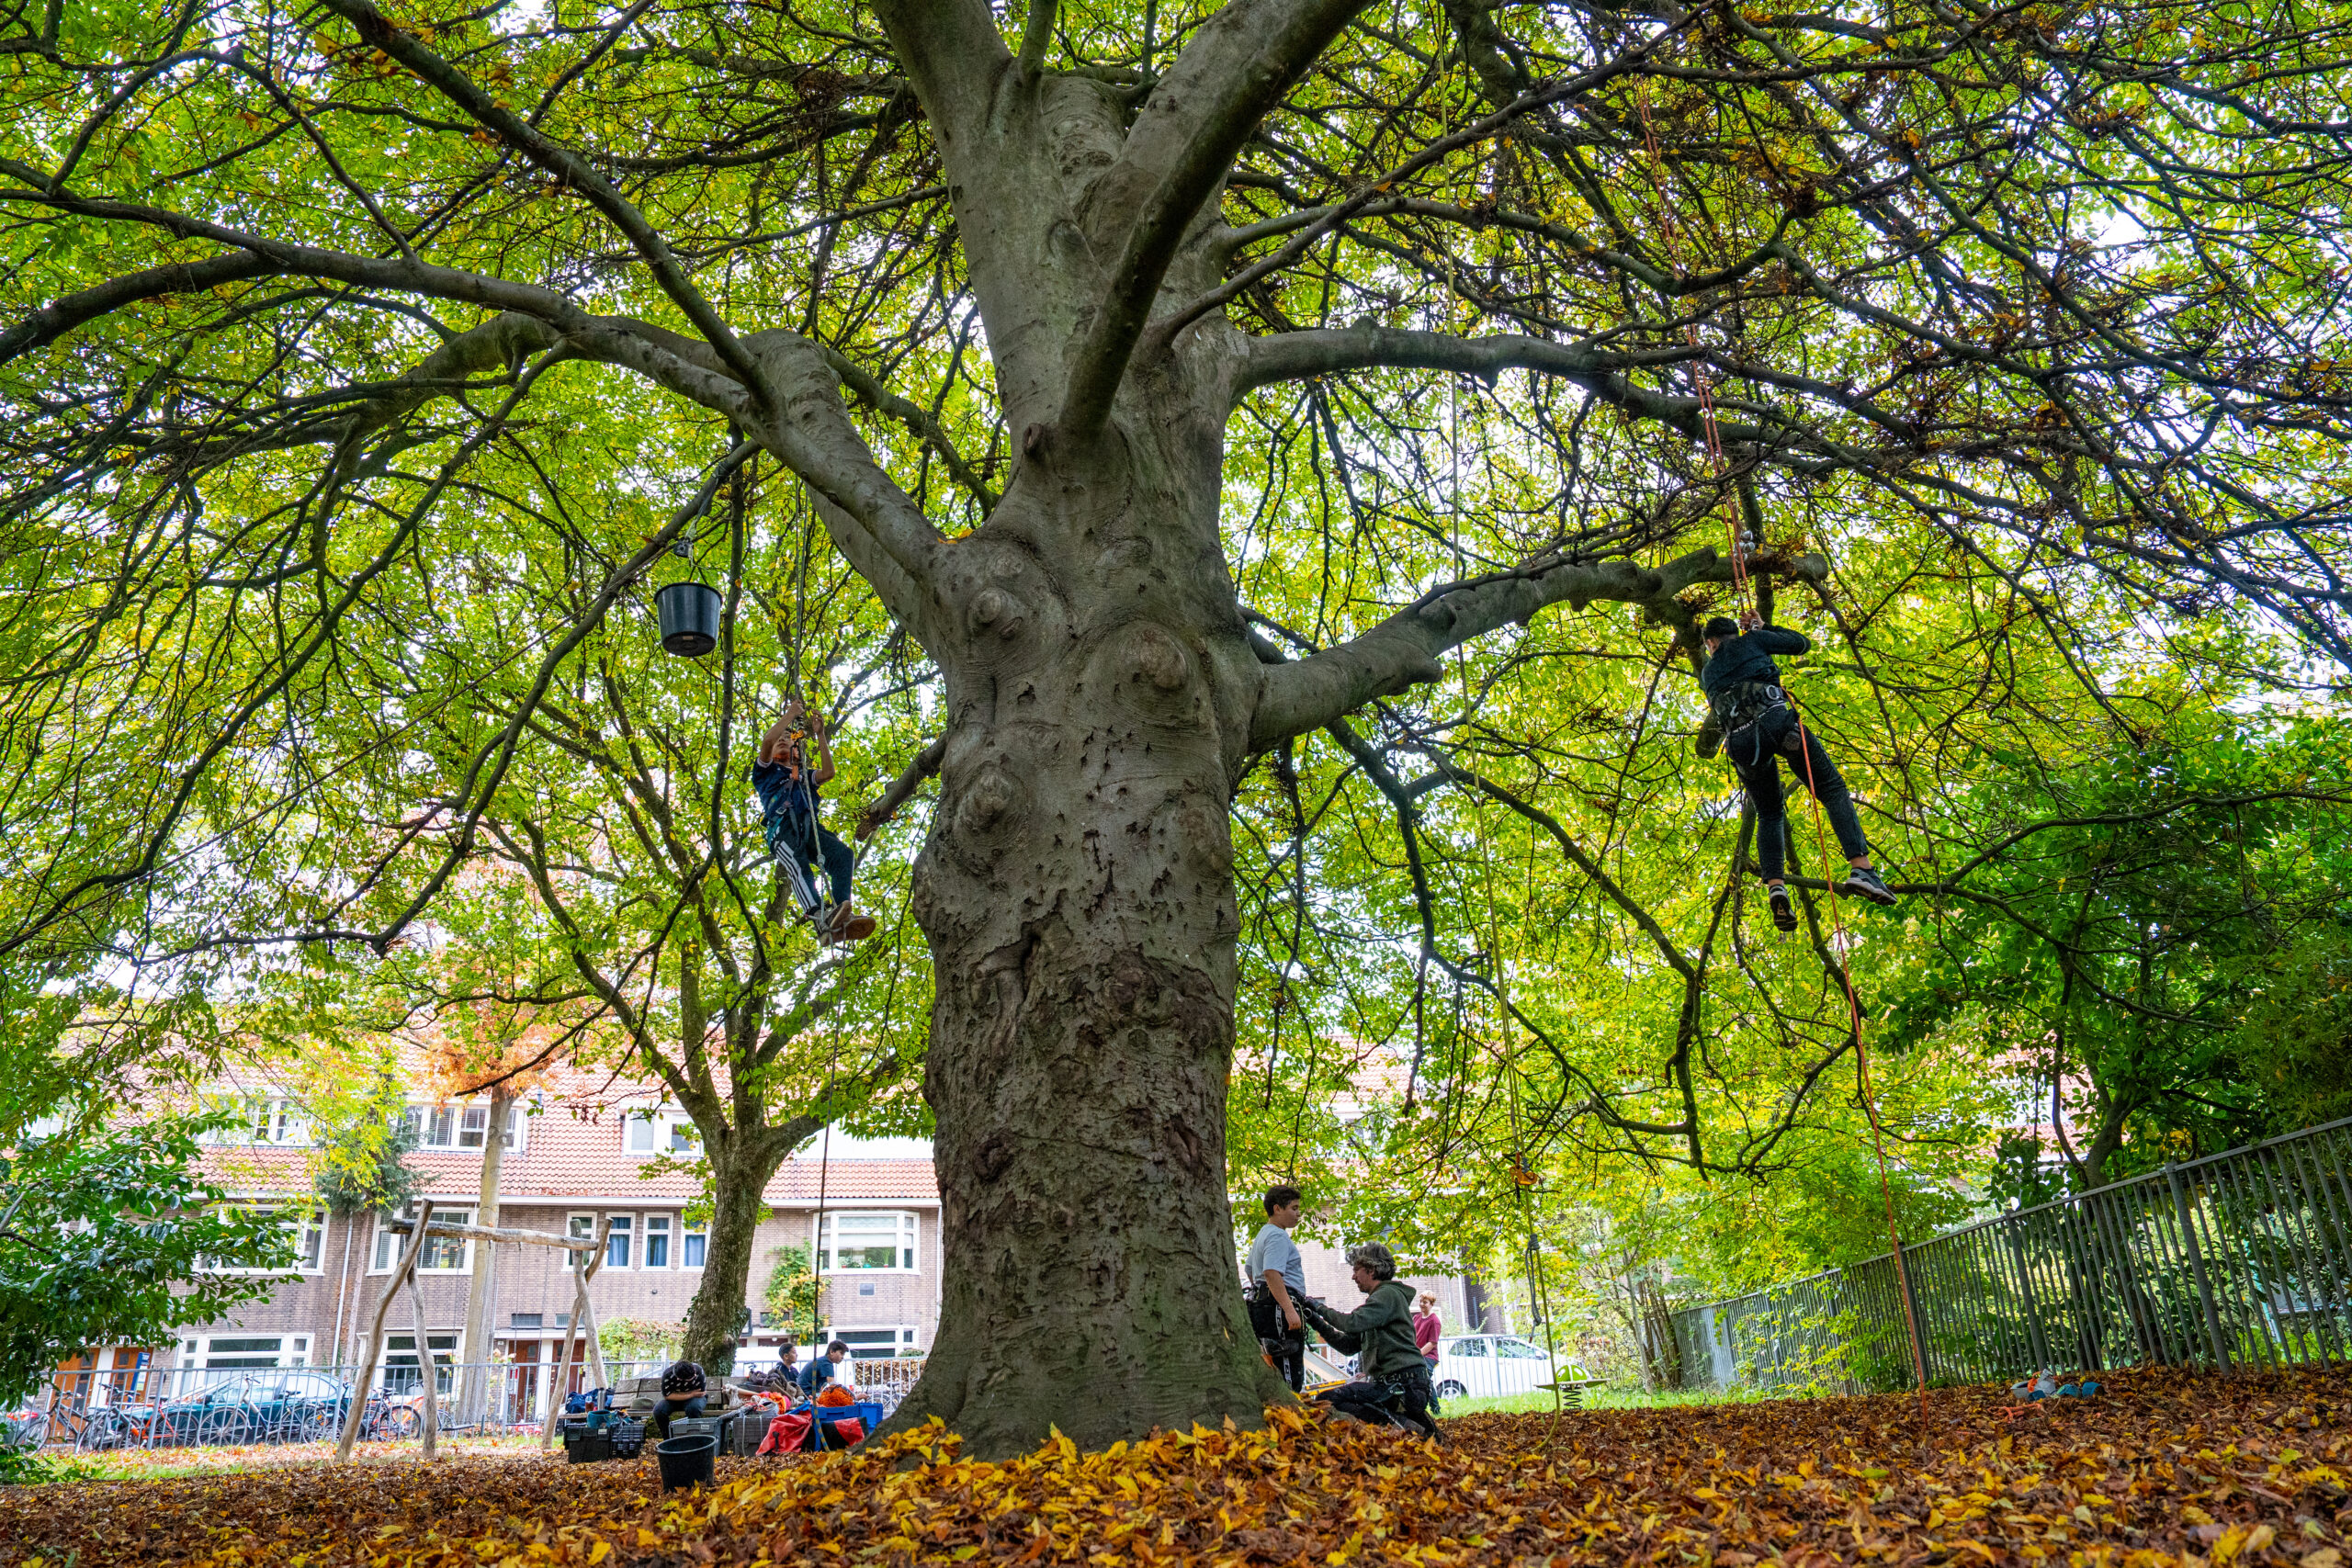 Foto's Erik Vos, Klimworkshop Stadsboswachter, bomen Beleven provincie Gelderland